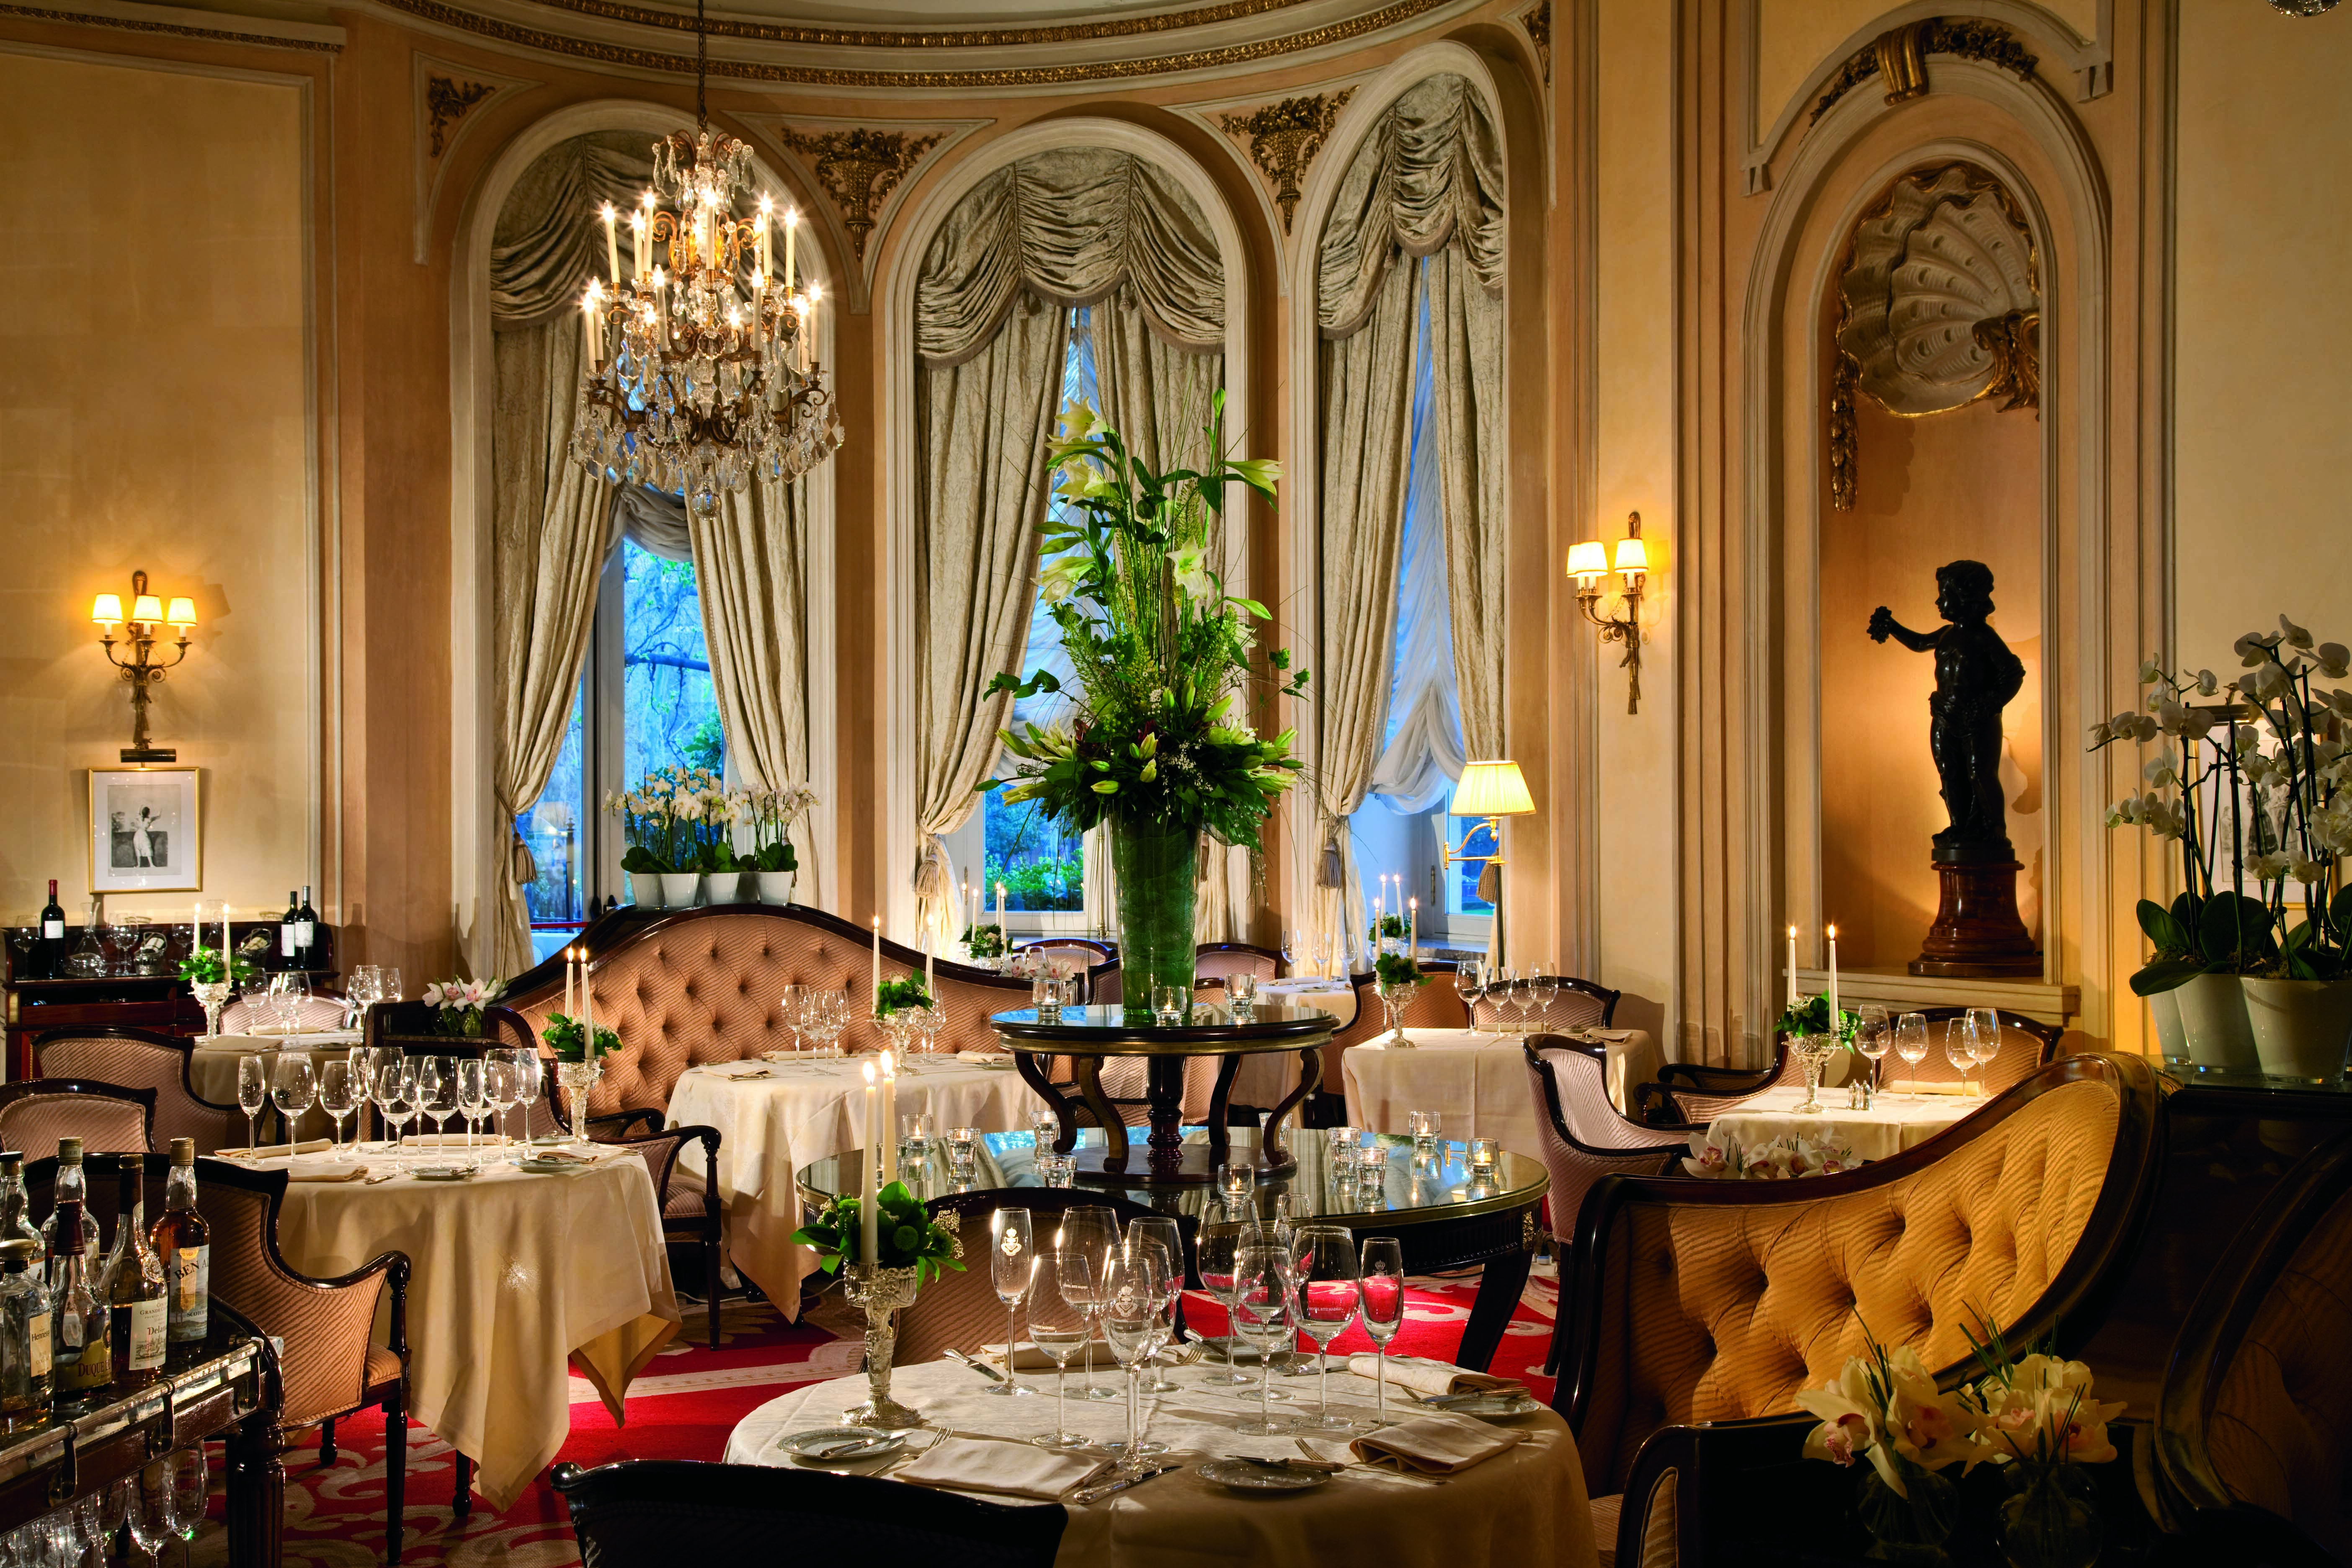 Название дорогих ресторанов. Отель Ритц Мадрид. Ресторан le Louis XV Монако. Ритц Карлтон Мадрид. Отель Ритц Лондон интерьер.